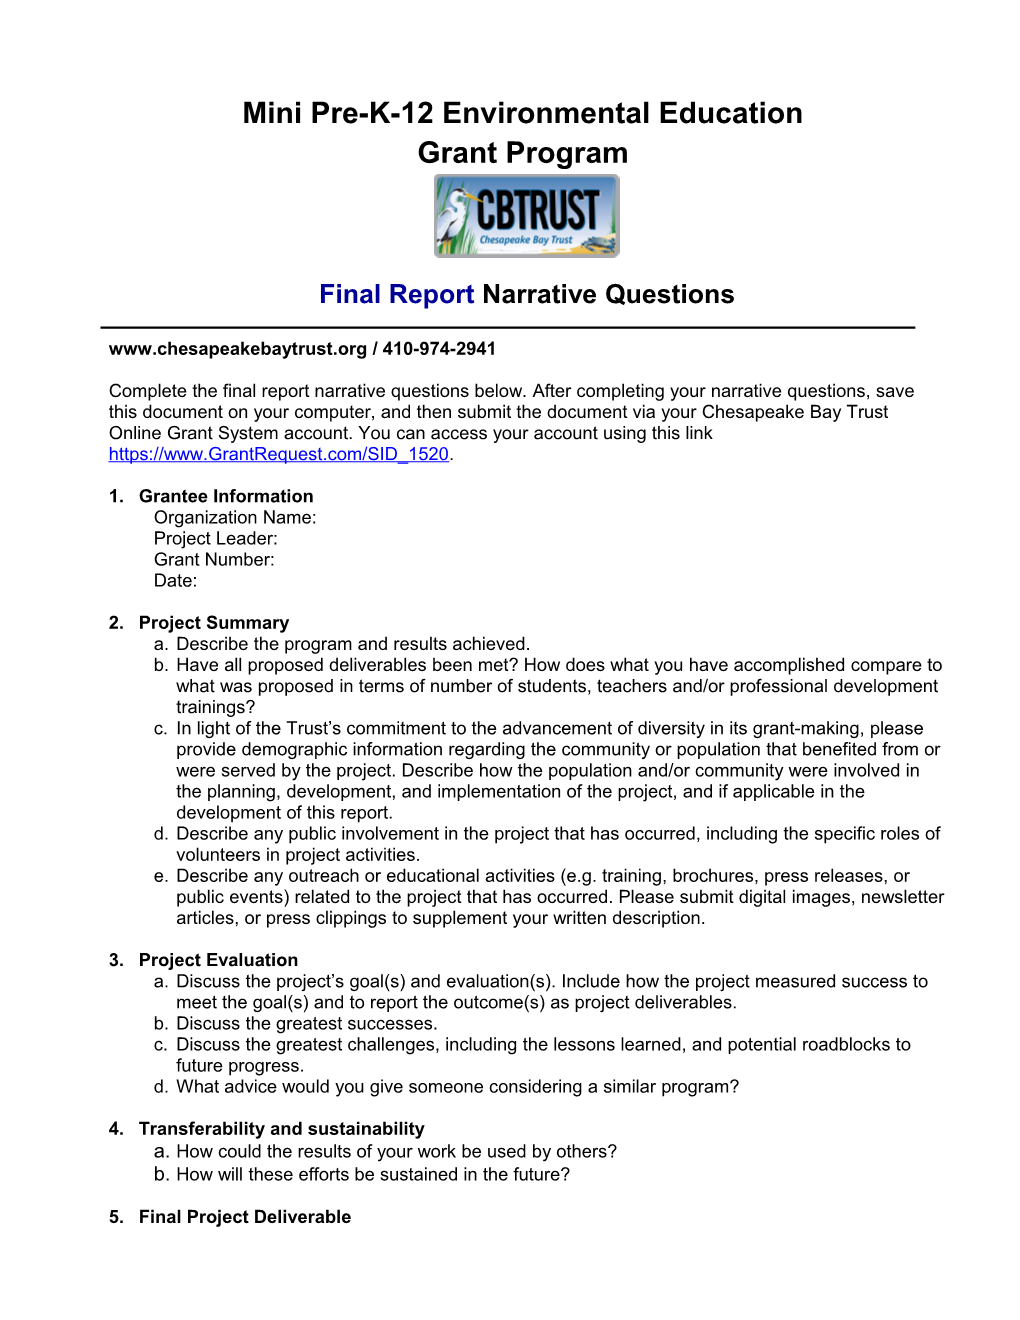 Mini Pre-K-12 Environmental Education Grant Programfinal Reportnarrative Questions Page 1